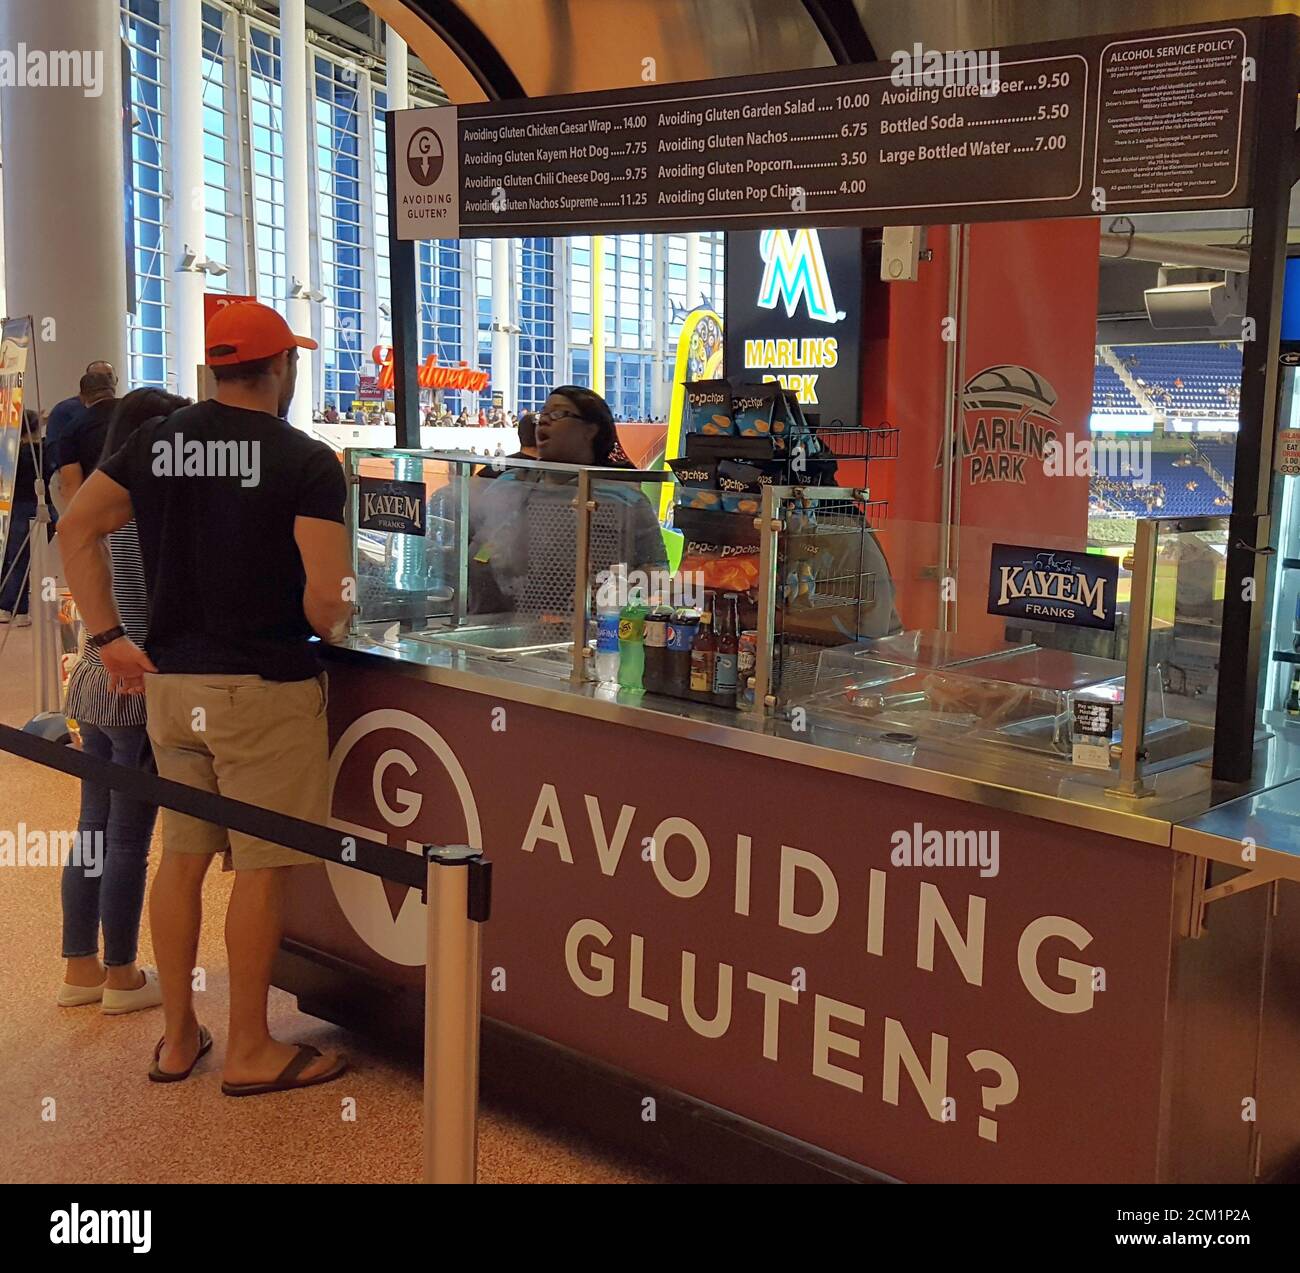 Avoiding Gluten?, the gluten-free food stand at Marlins Park baseball, Miami, Florida, United States Stock Photo